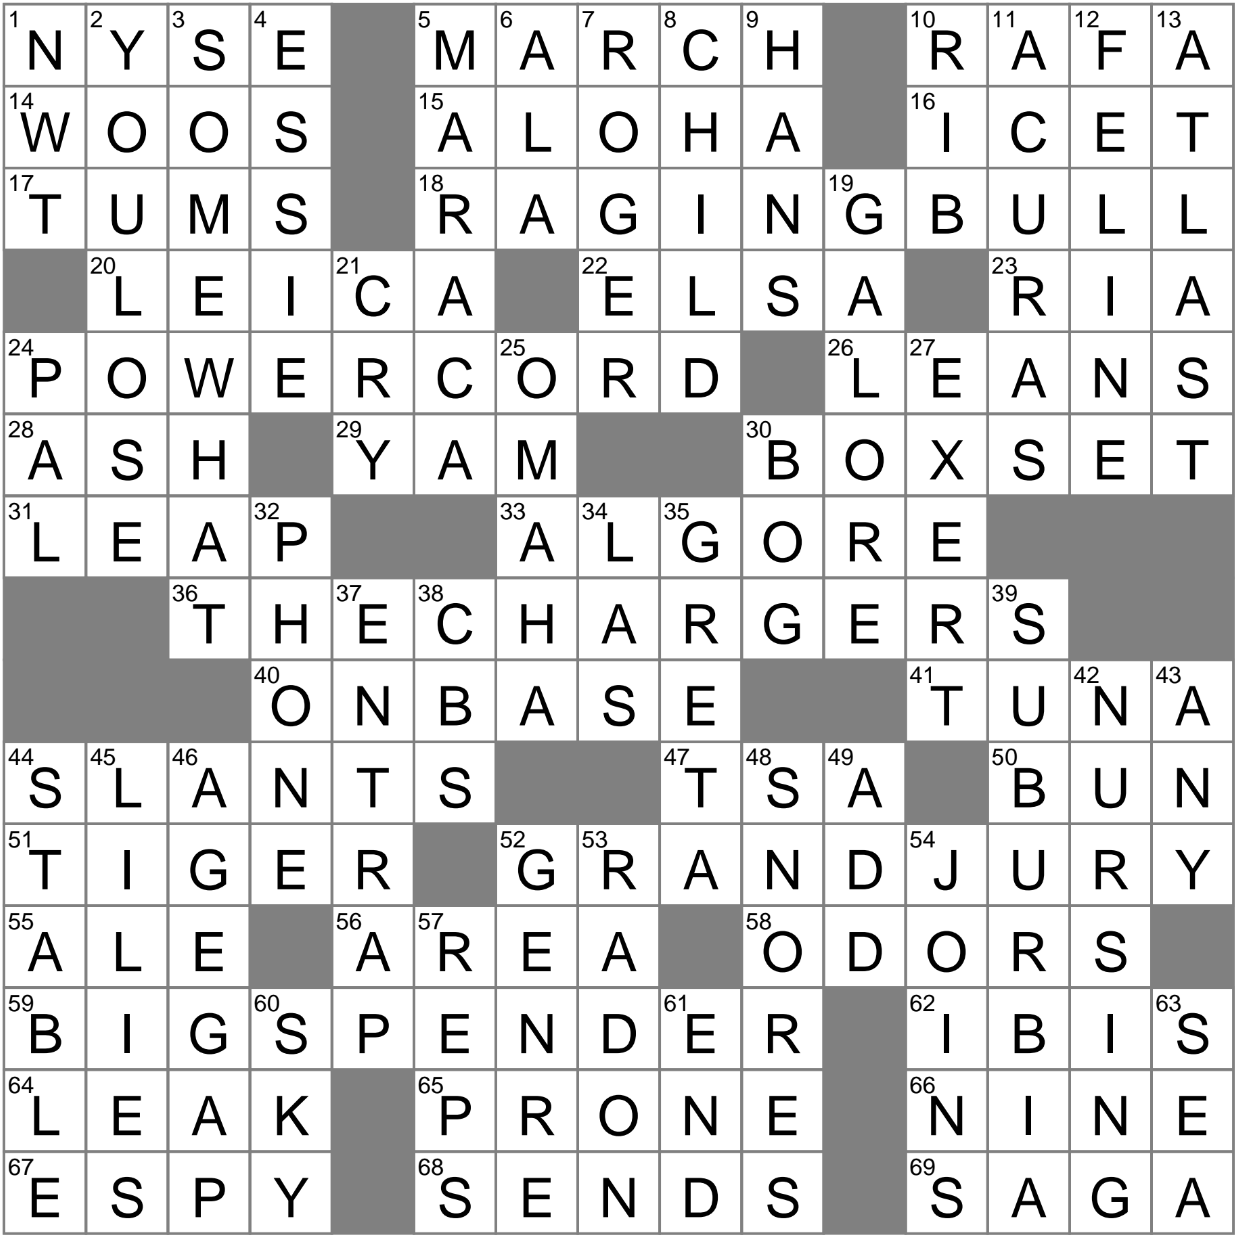 LA Times Crossword 22 Mar 23 Wednesday LAXCrossword com